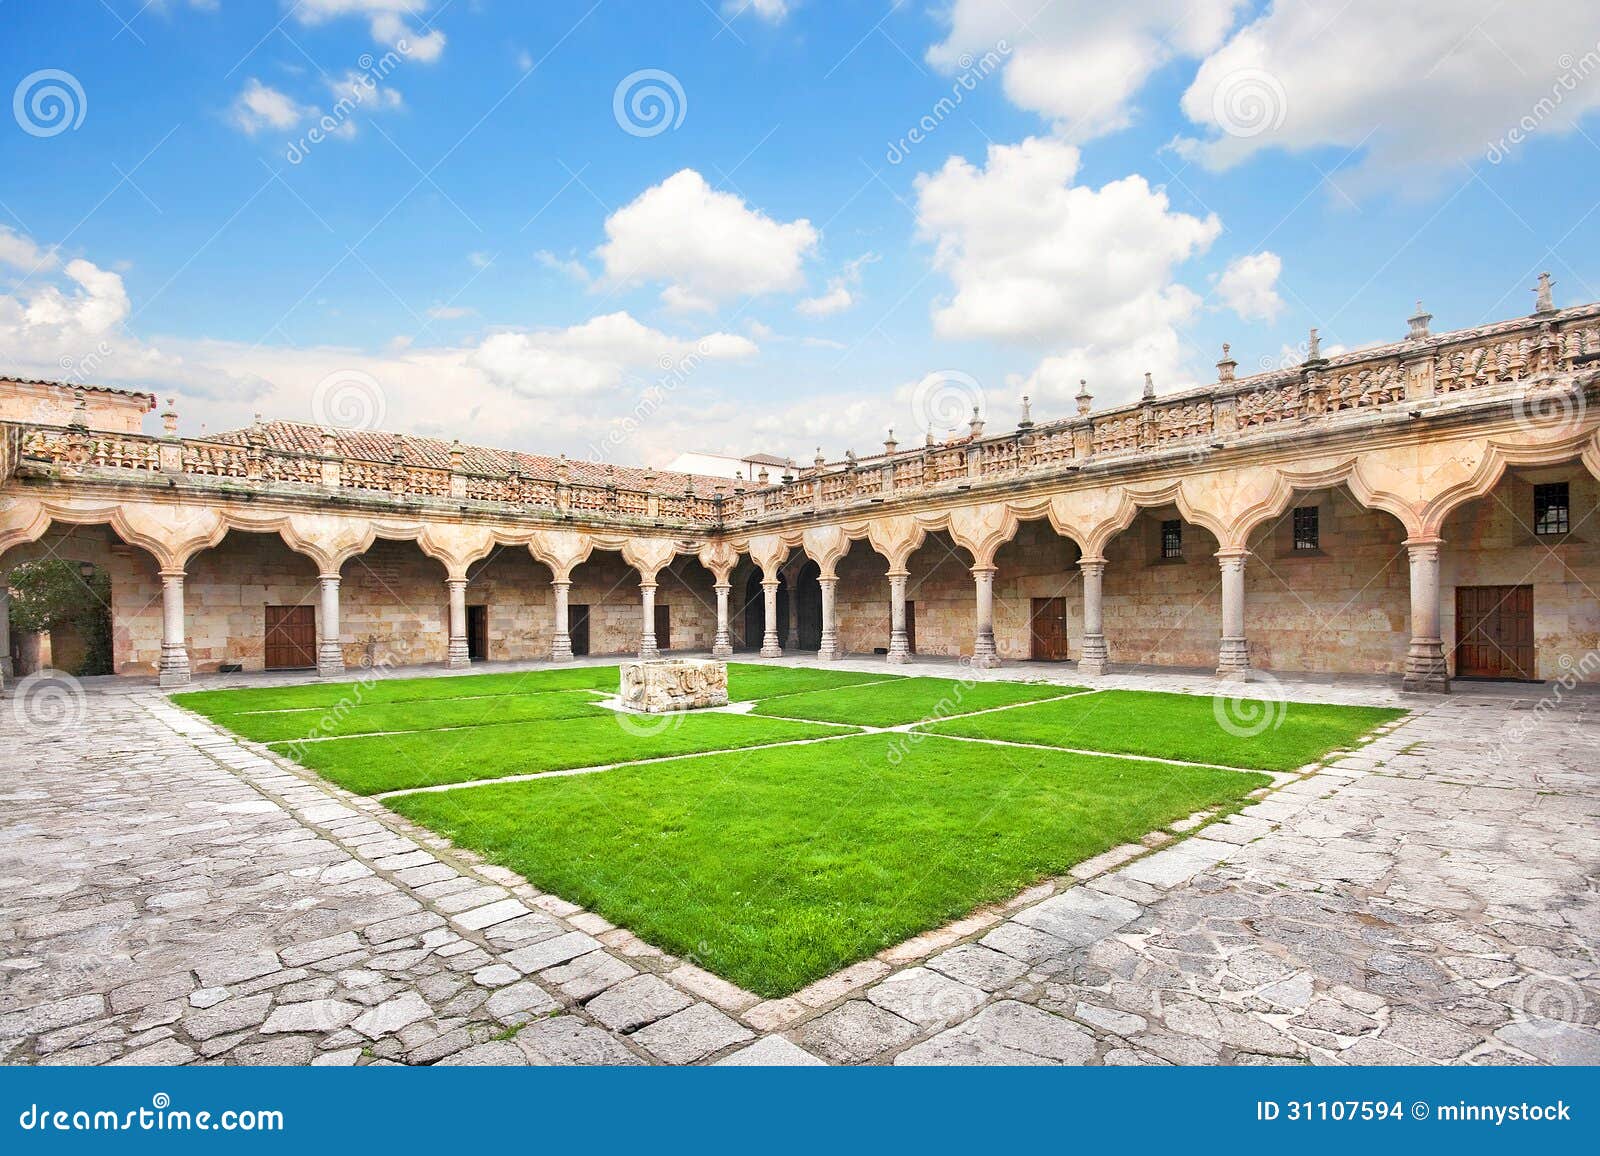 courtyard of famous university of salamanca, castilla leon, spain